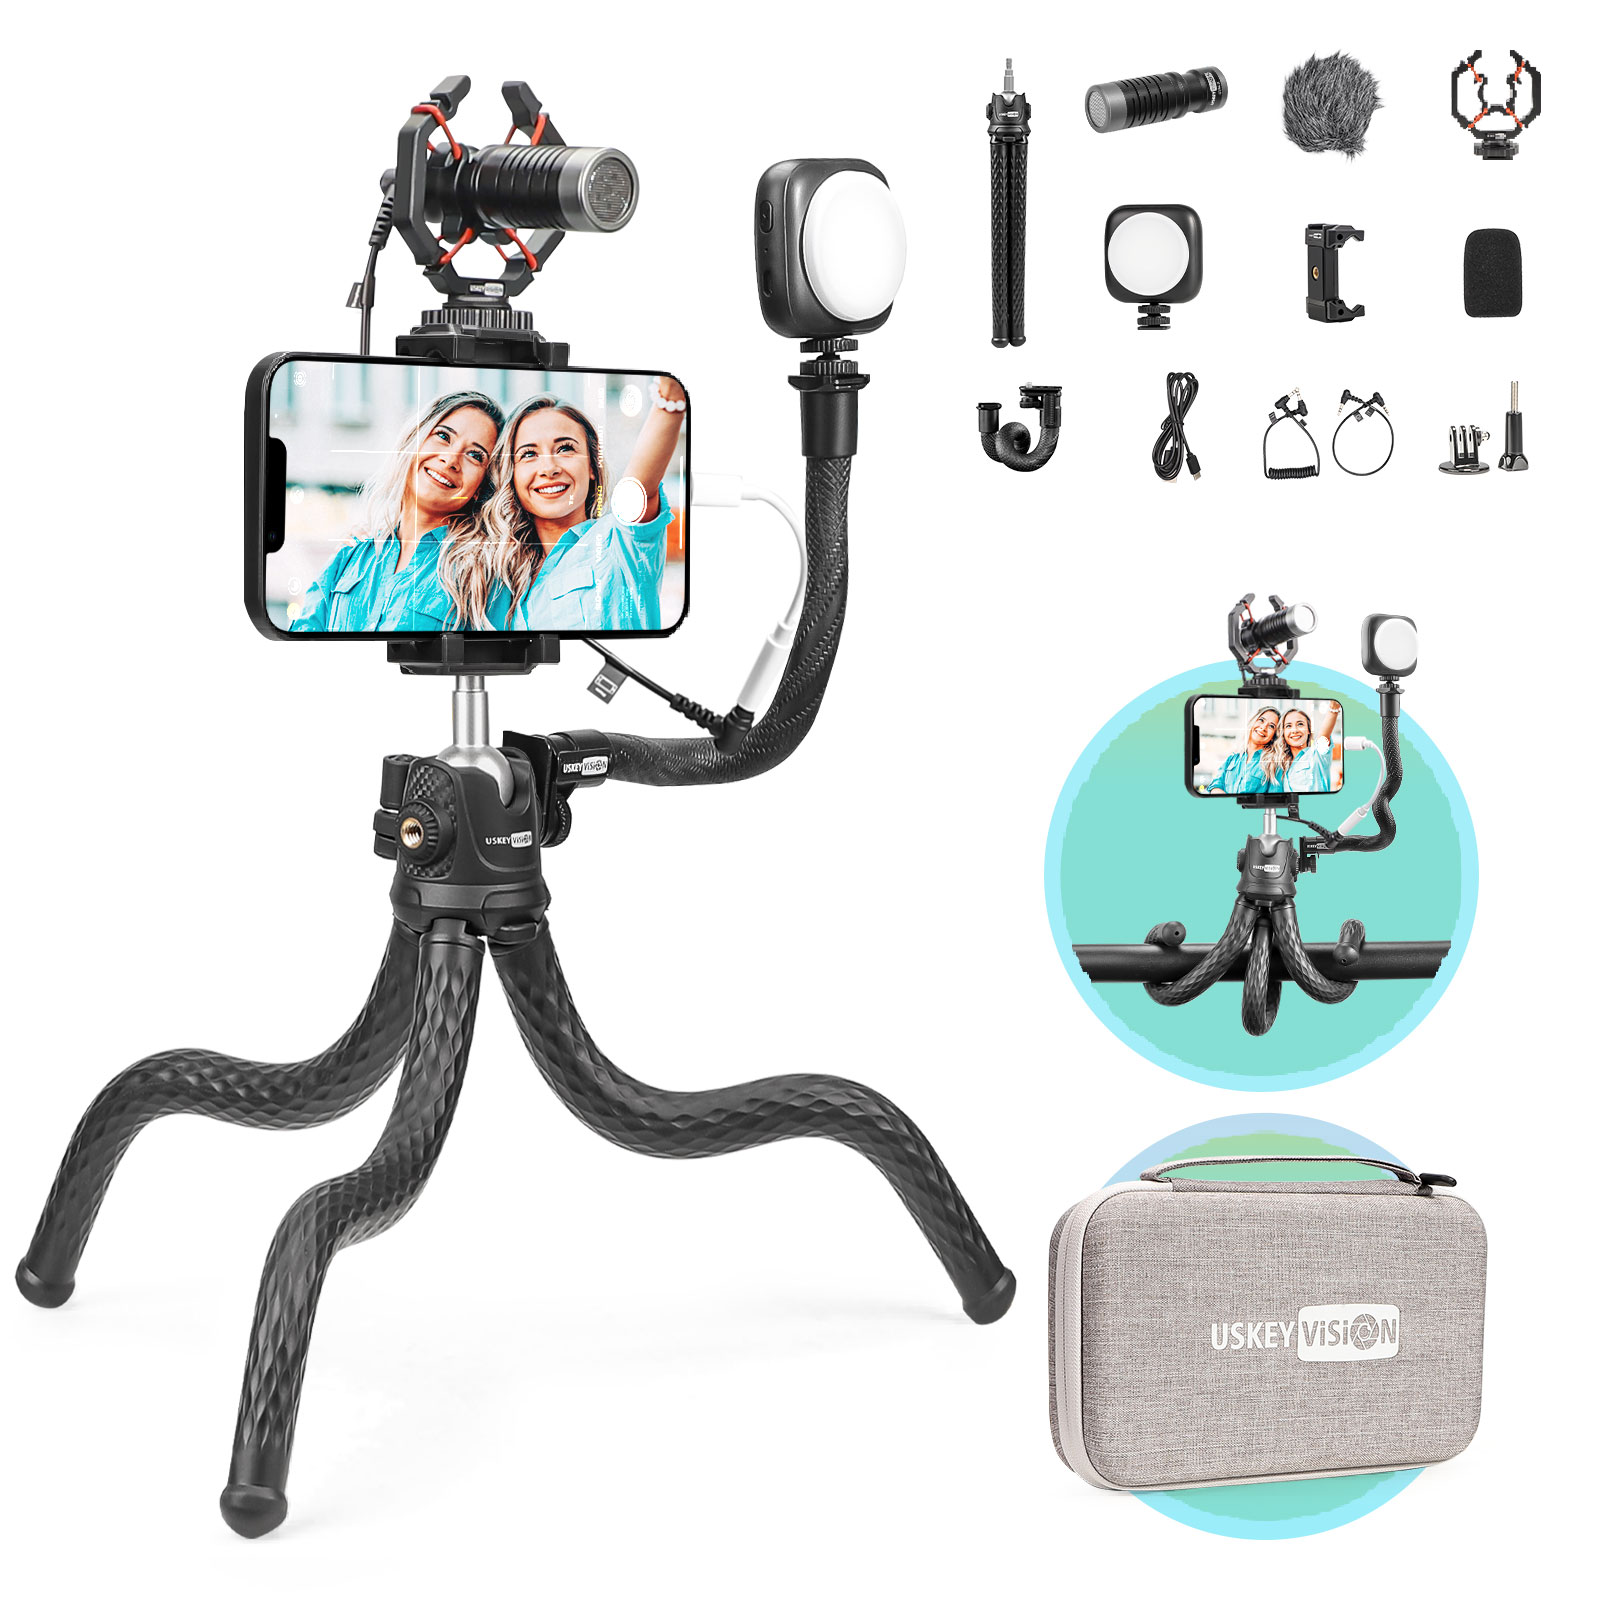 Flex-K2 Flexible Smartphone Video Vlogging Kit Flexible Tripod Octopus Tripod Smartphone Vlog Kit Video Kits